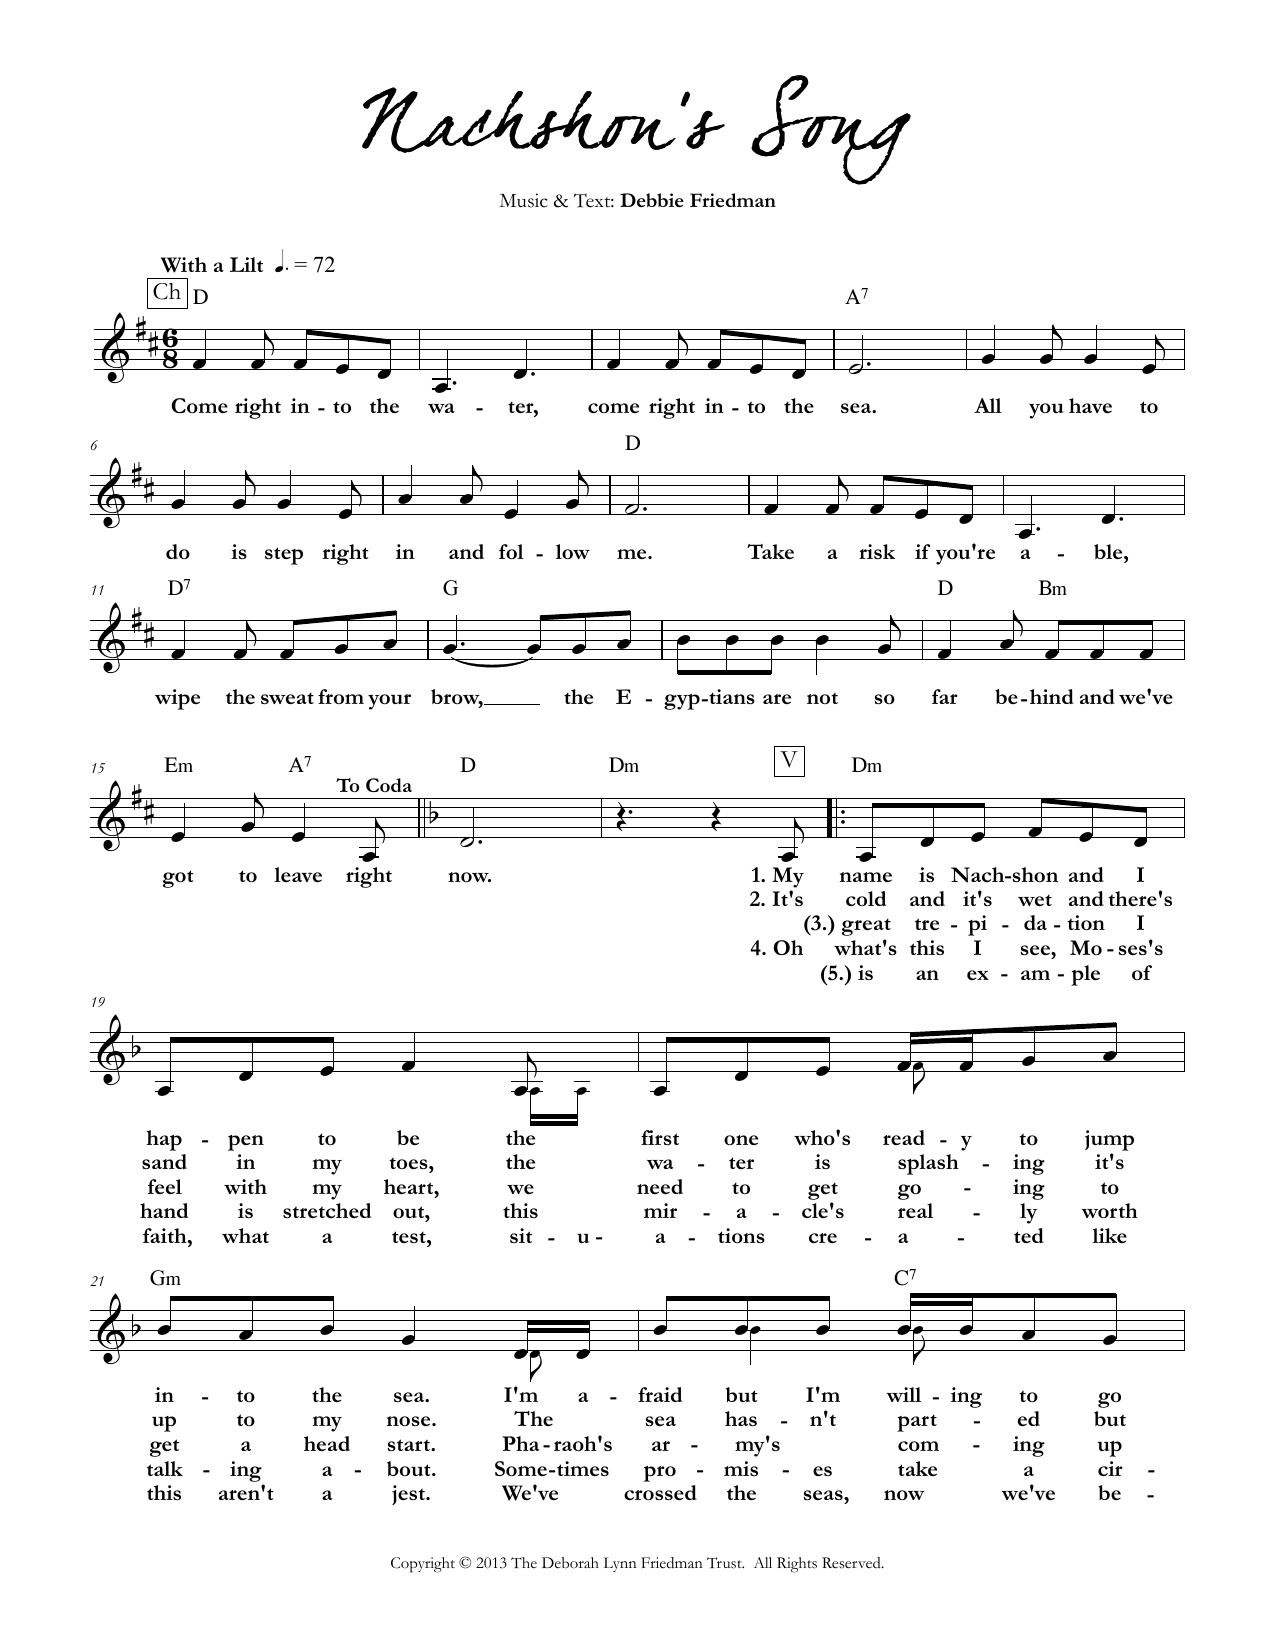 Debbie Friedman Nachshon's Song Sheet Music Notes & Chords for Lead Sheet / Fake Book - Download or Print PDF